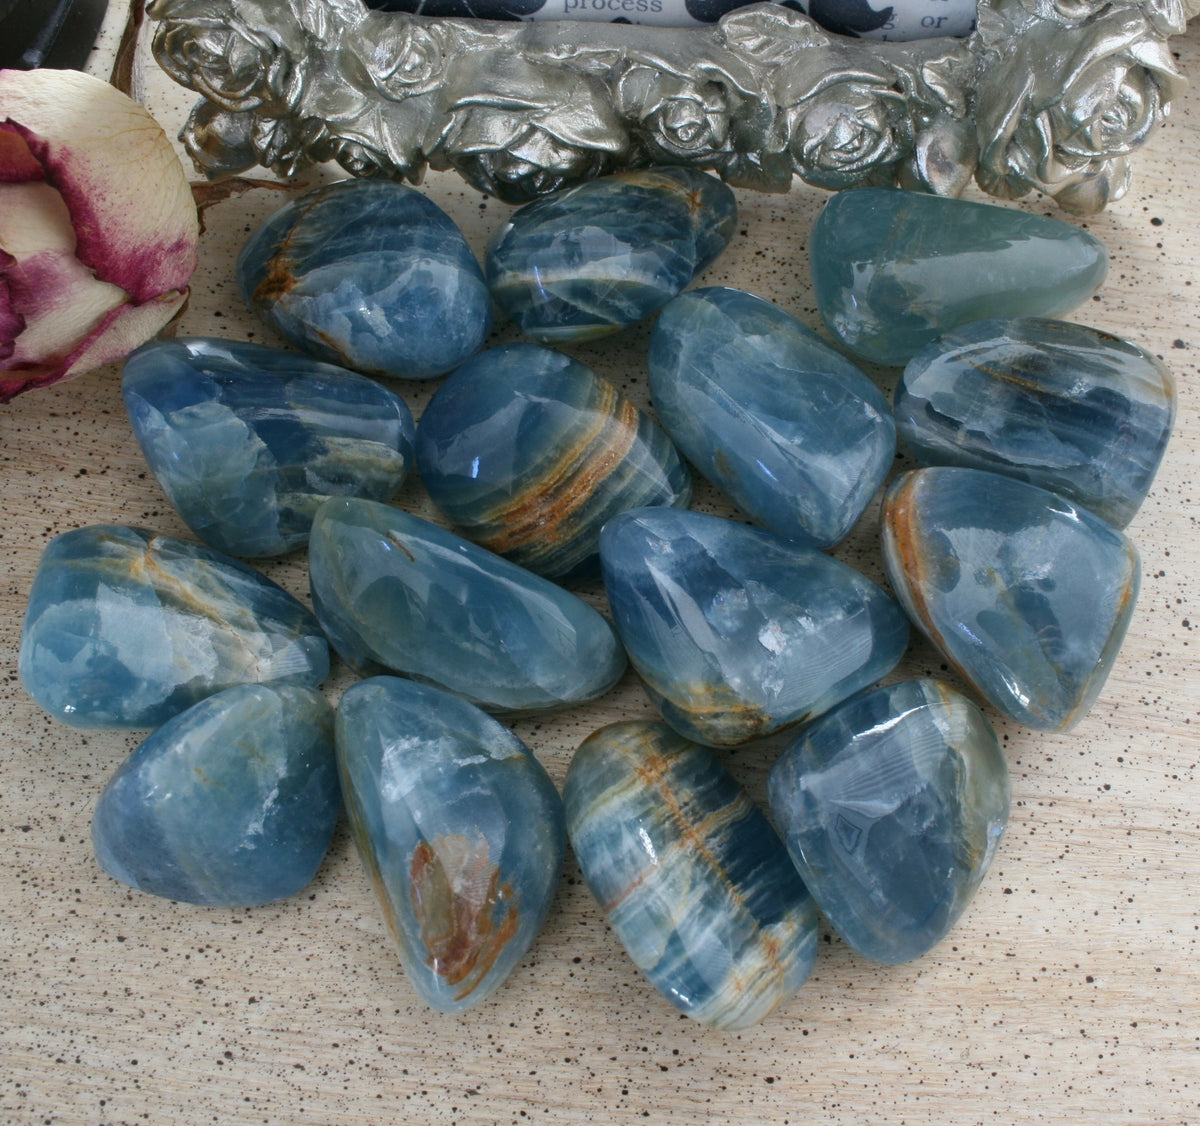 Blue Calcite / Blue Onyx Tumbled Stone from Argentina, also called Lemurian Aquatine Calcite, TUM3